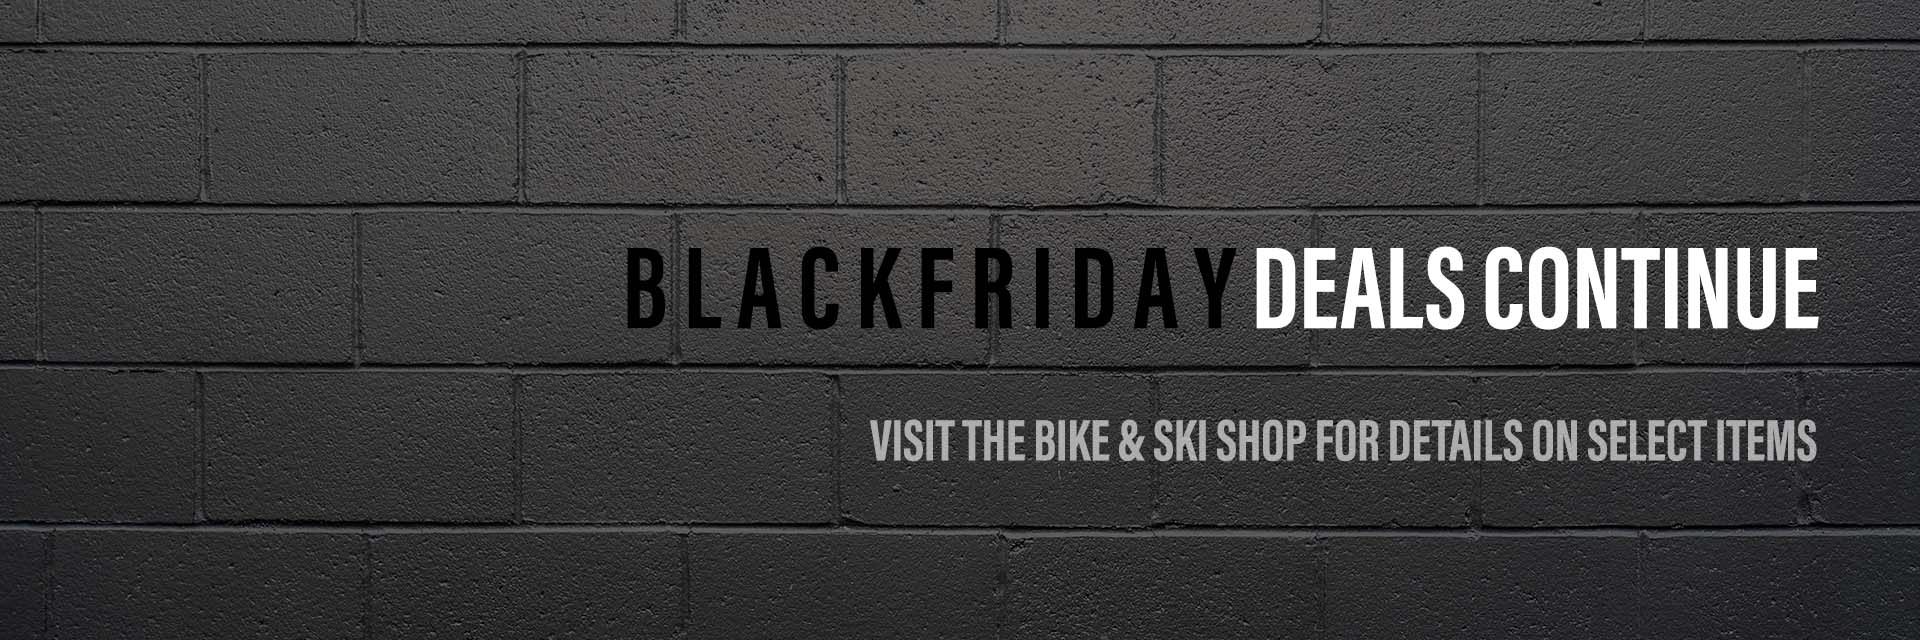 BLACK FRIDAY DEALS CONTINUE AT THE RADICAL EDGE BIKE & SKI SHOP - Visit us for details on select items!